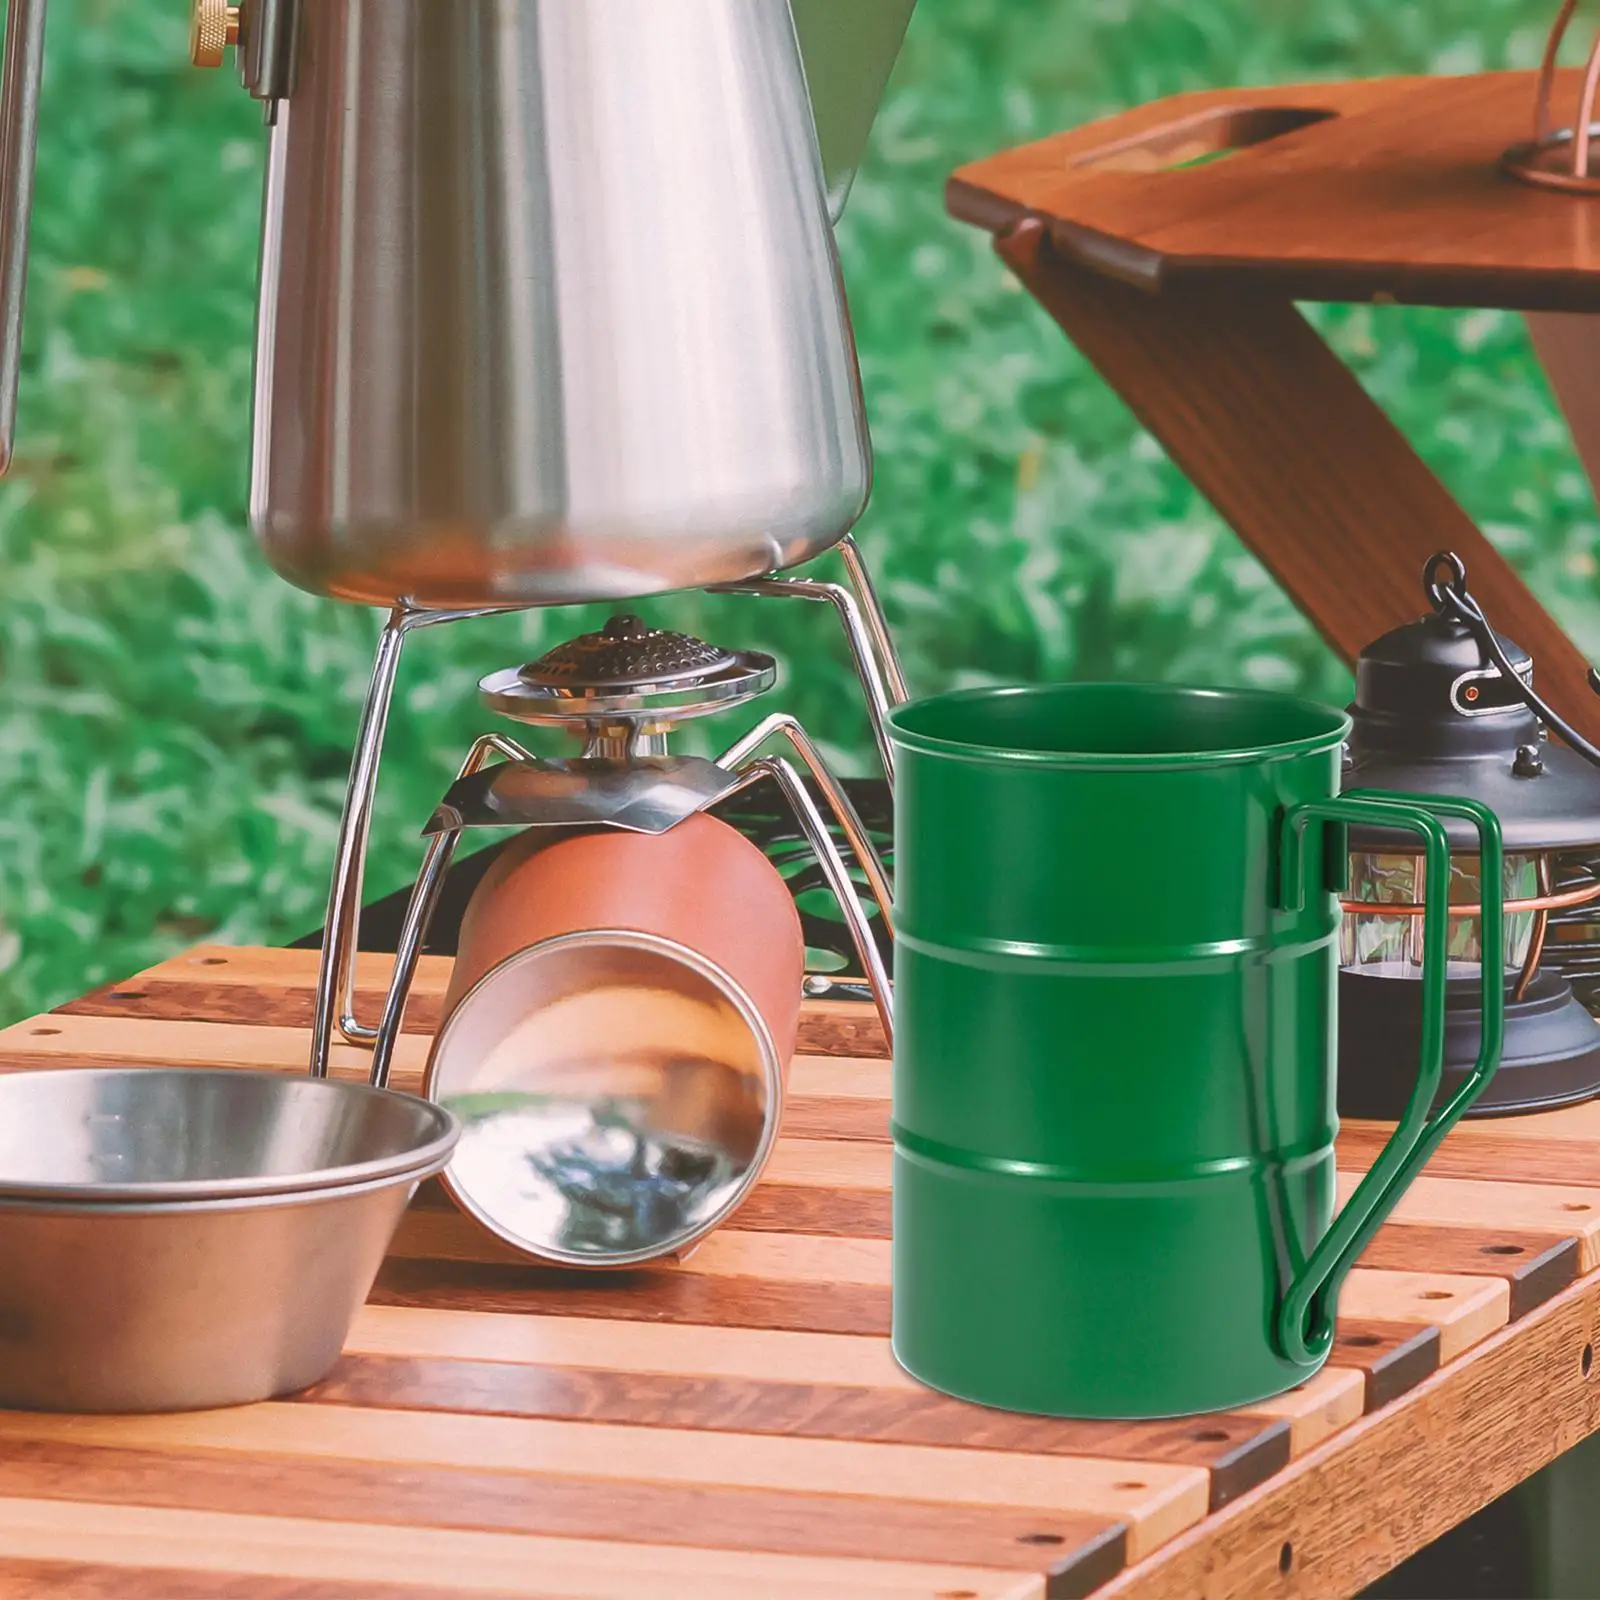 Stainless Steel Camping Mug Multifunctional Tableware Pot coffee Mug Beer Mug for Picnic Travel Garden Backpacking Hiking